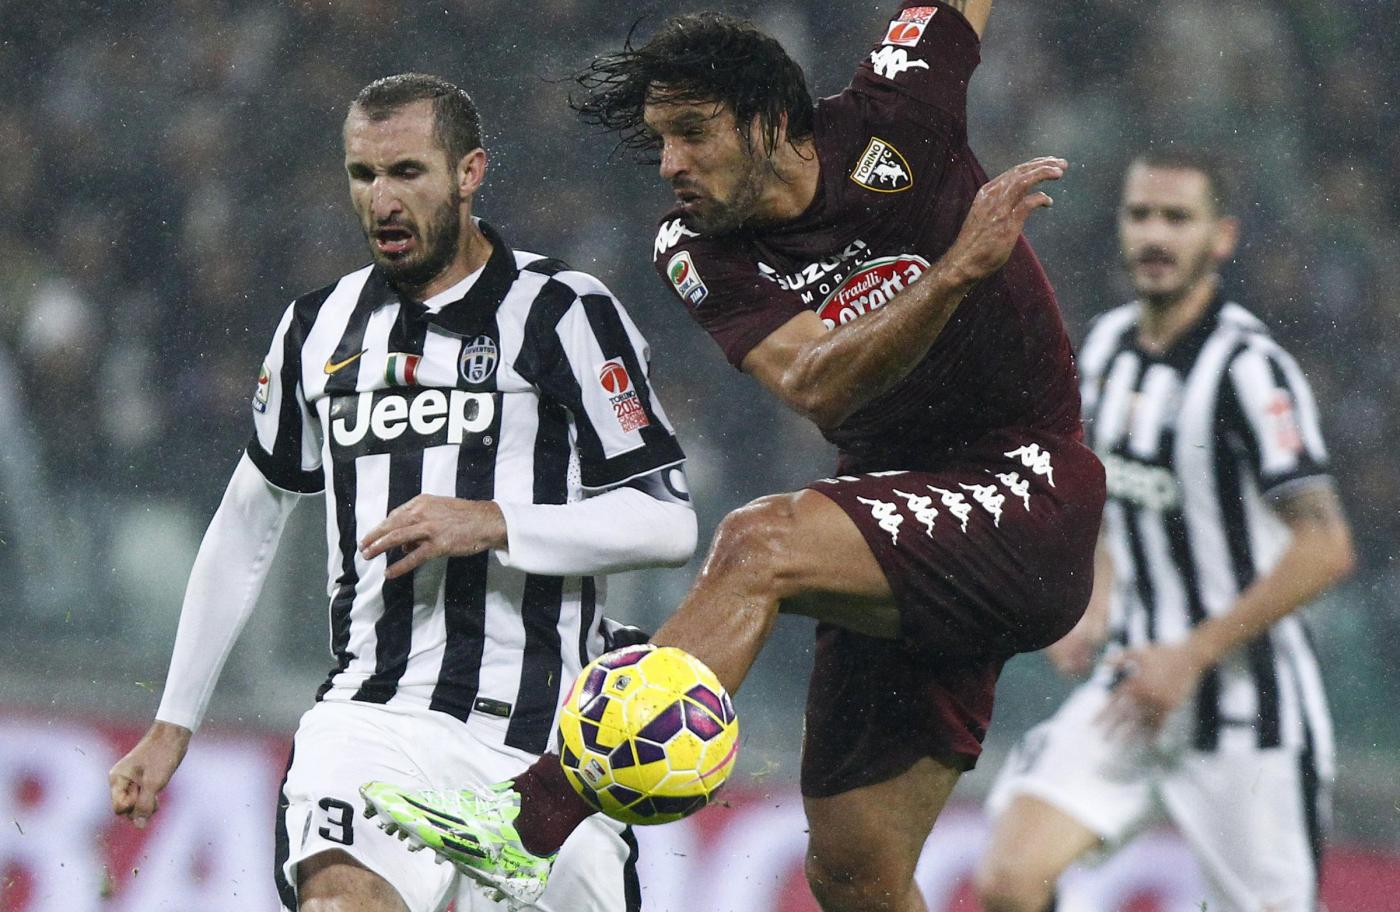 Juventus-Torino Serie A, analisi e pronostico: Derby incerto